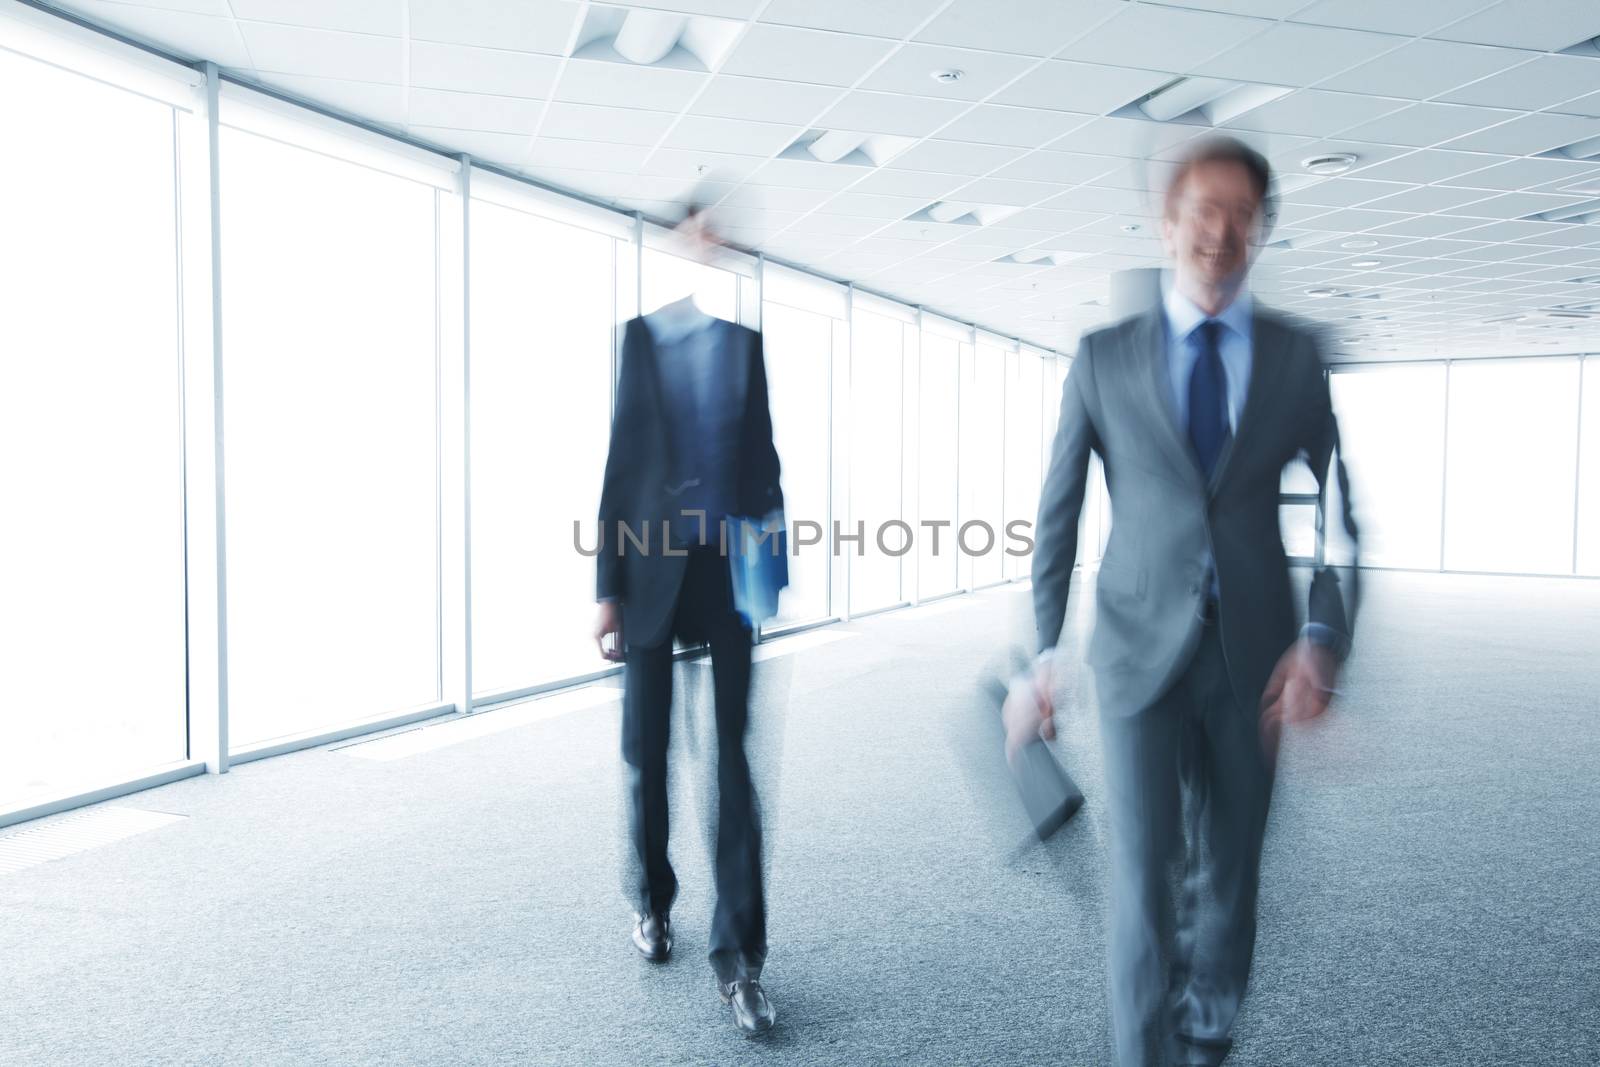 Blurry portrait of walking businessman by ALotOfPeople